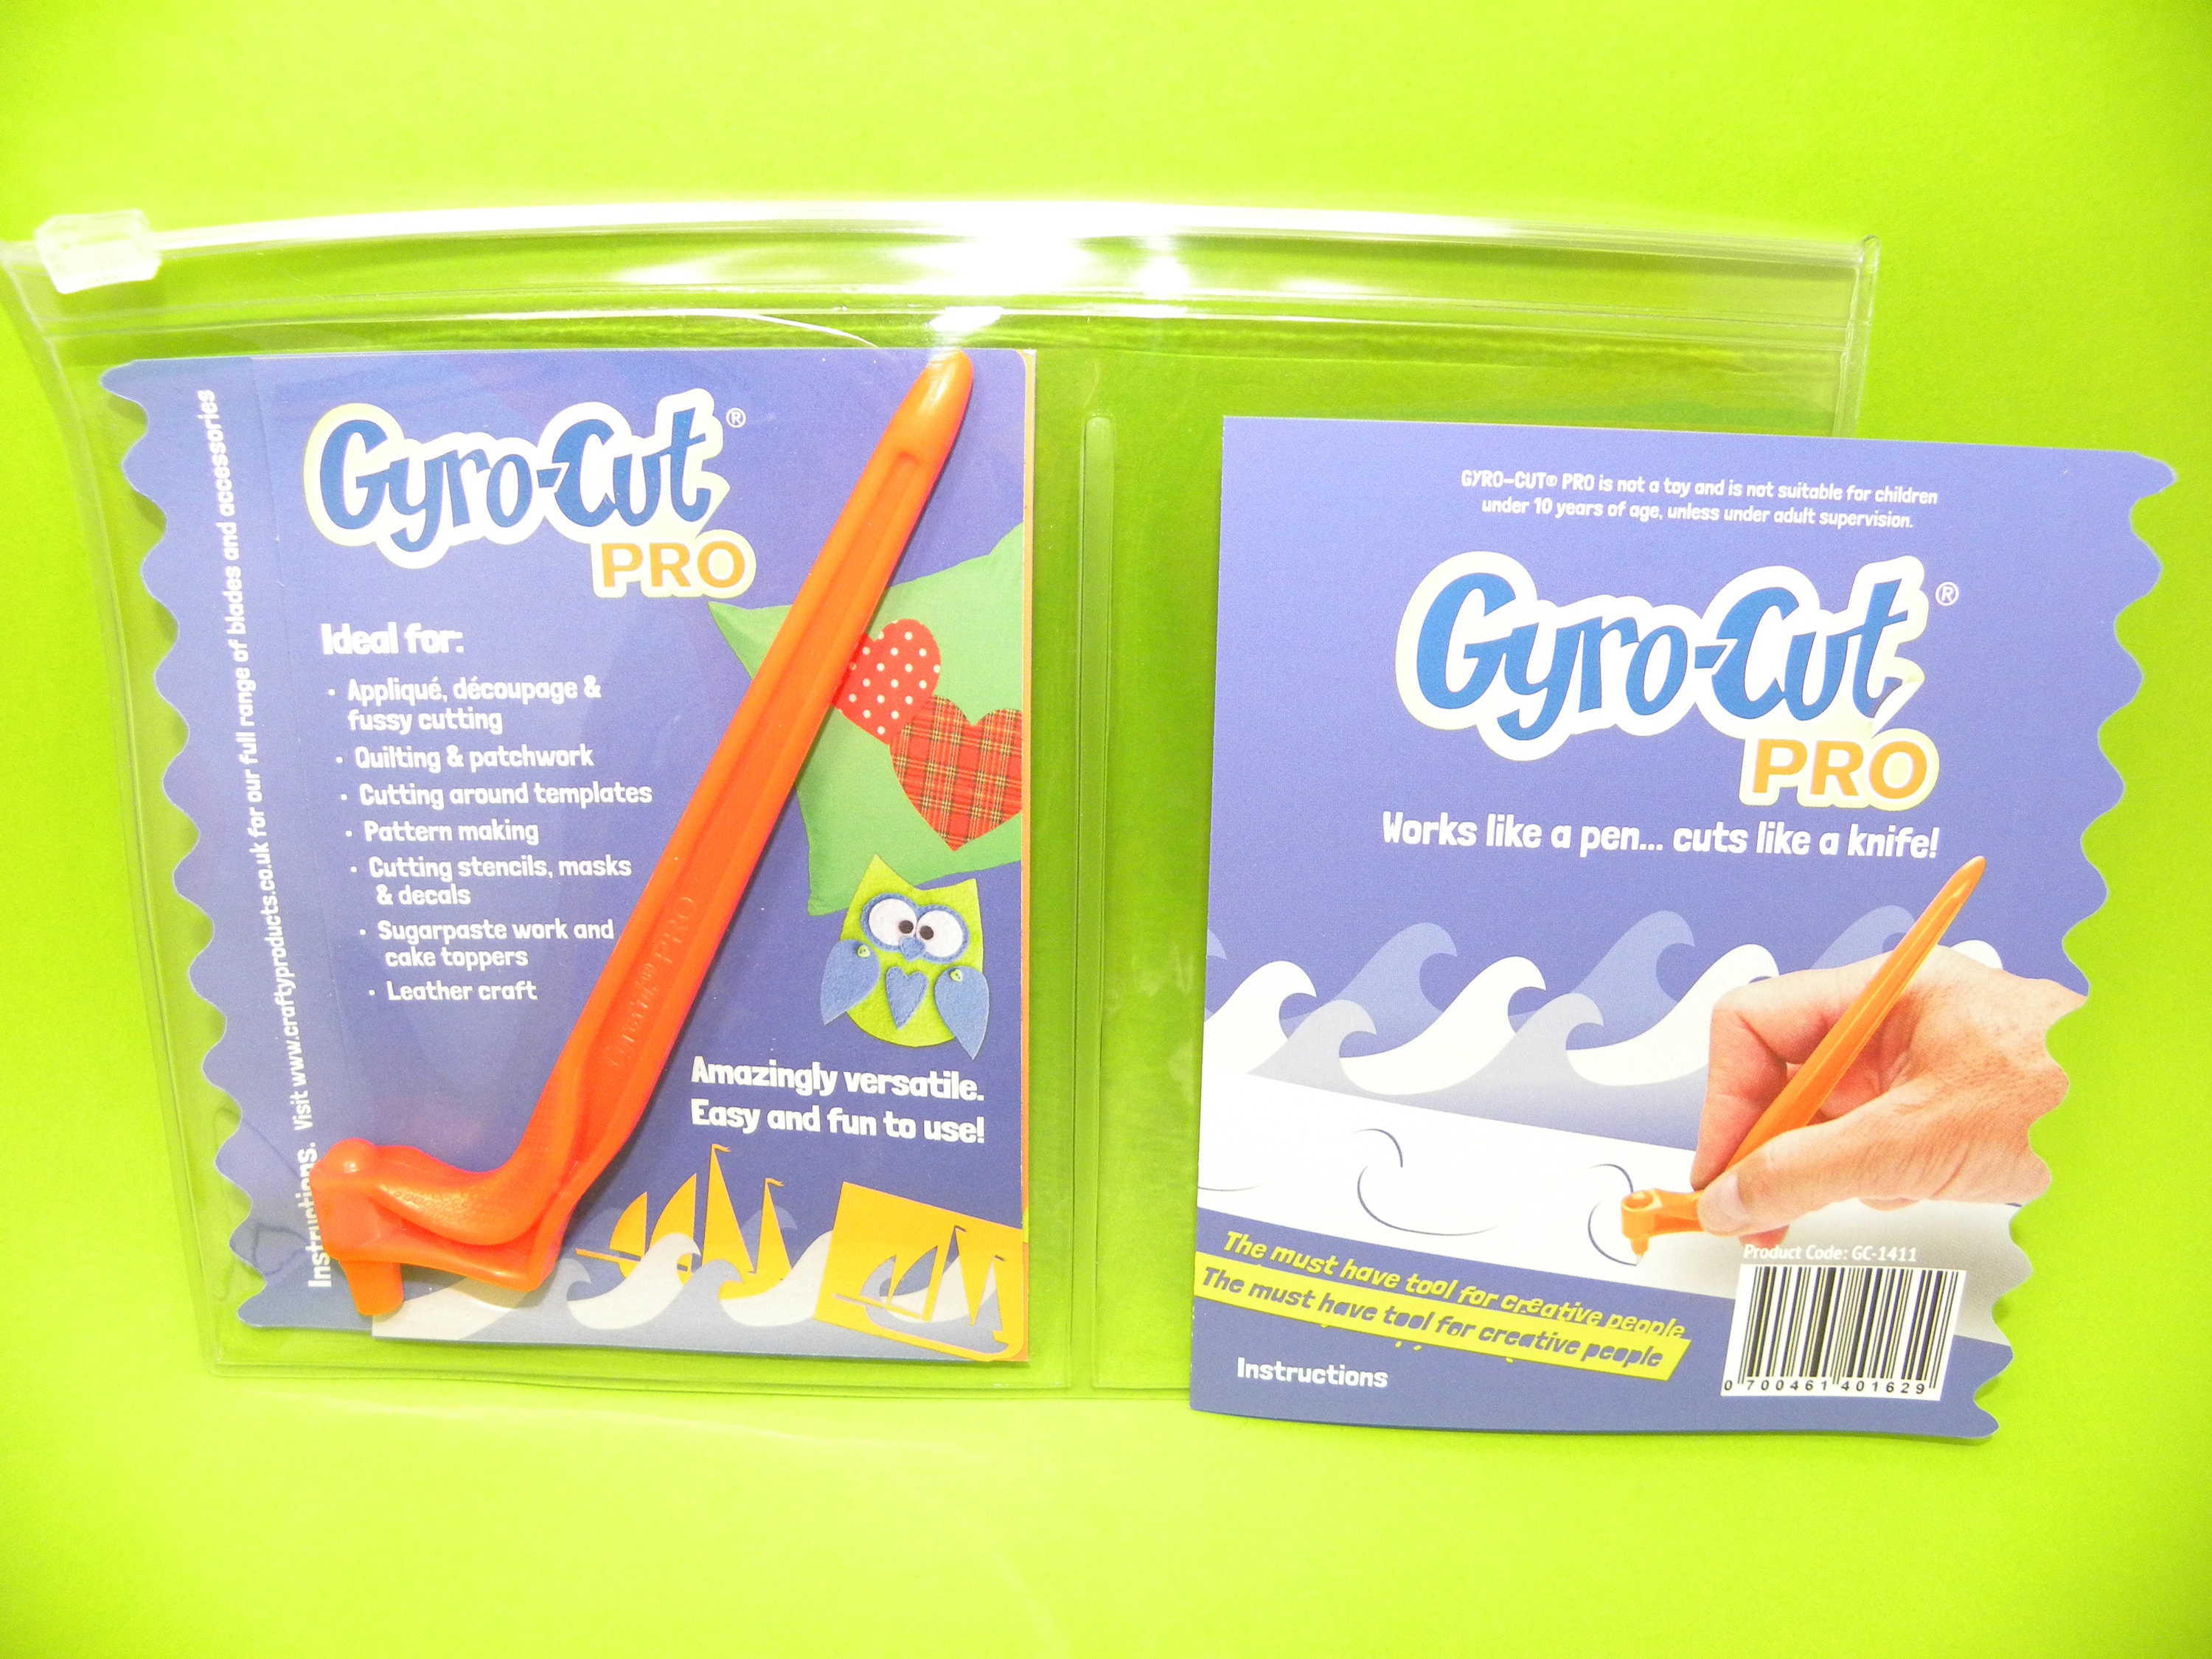 Tried & Tested - Gyro-Cut® tool